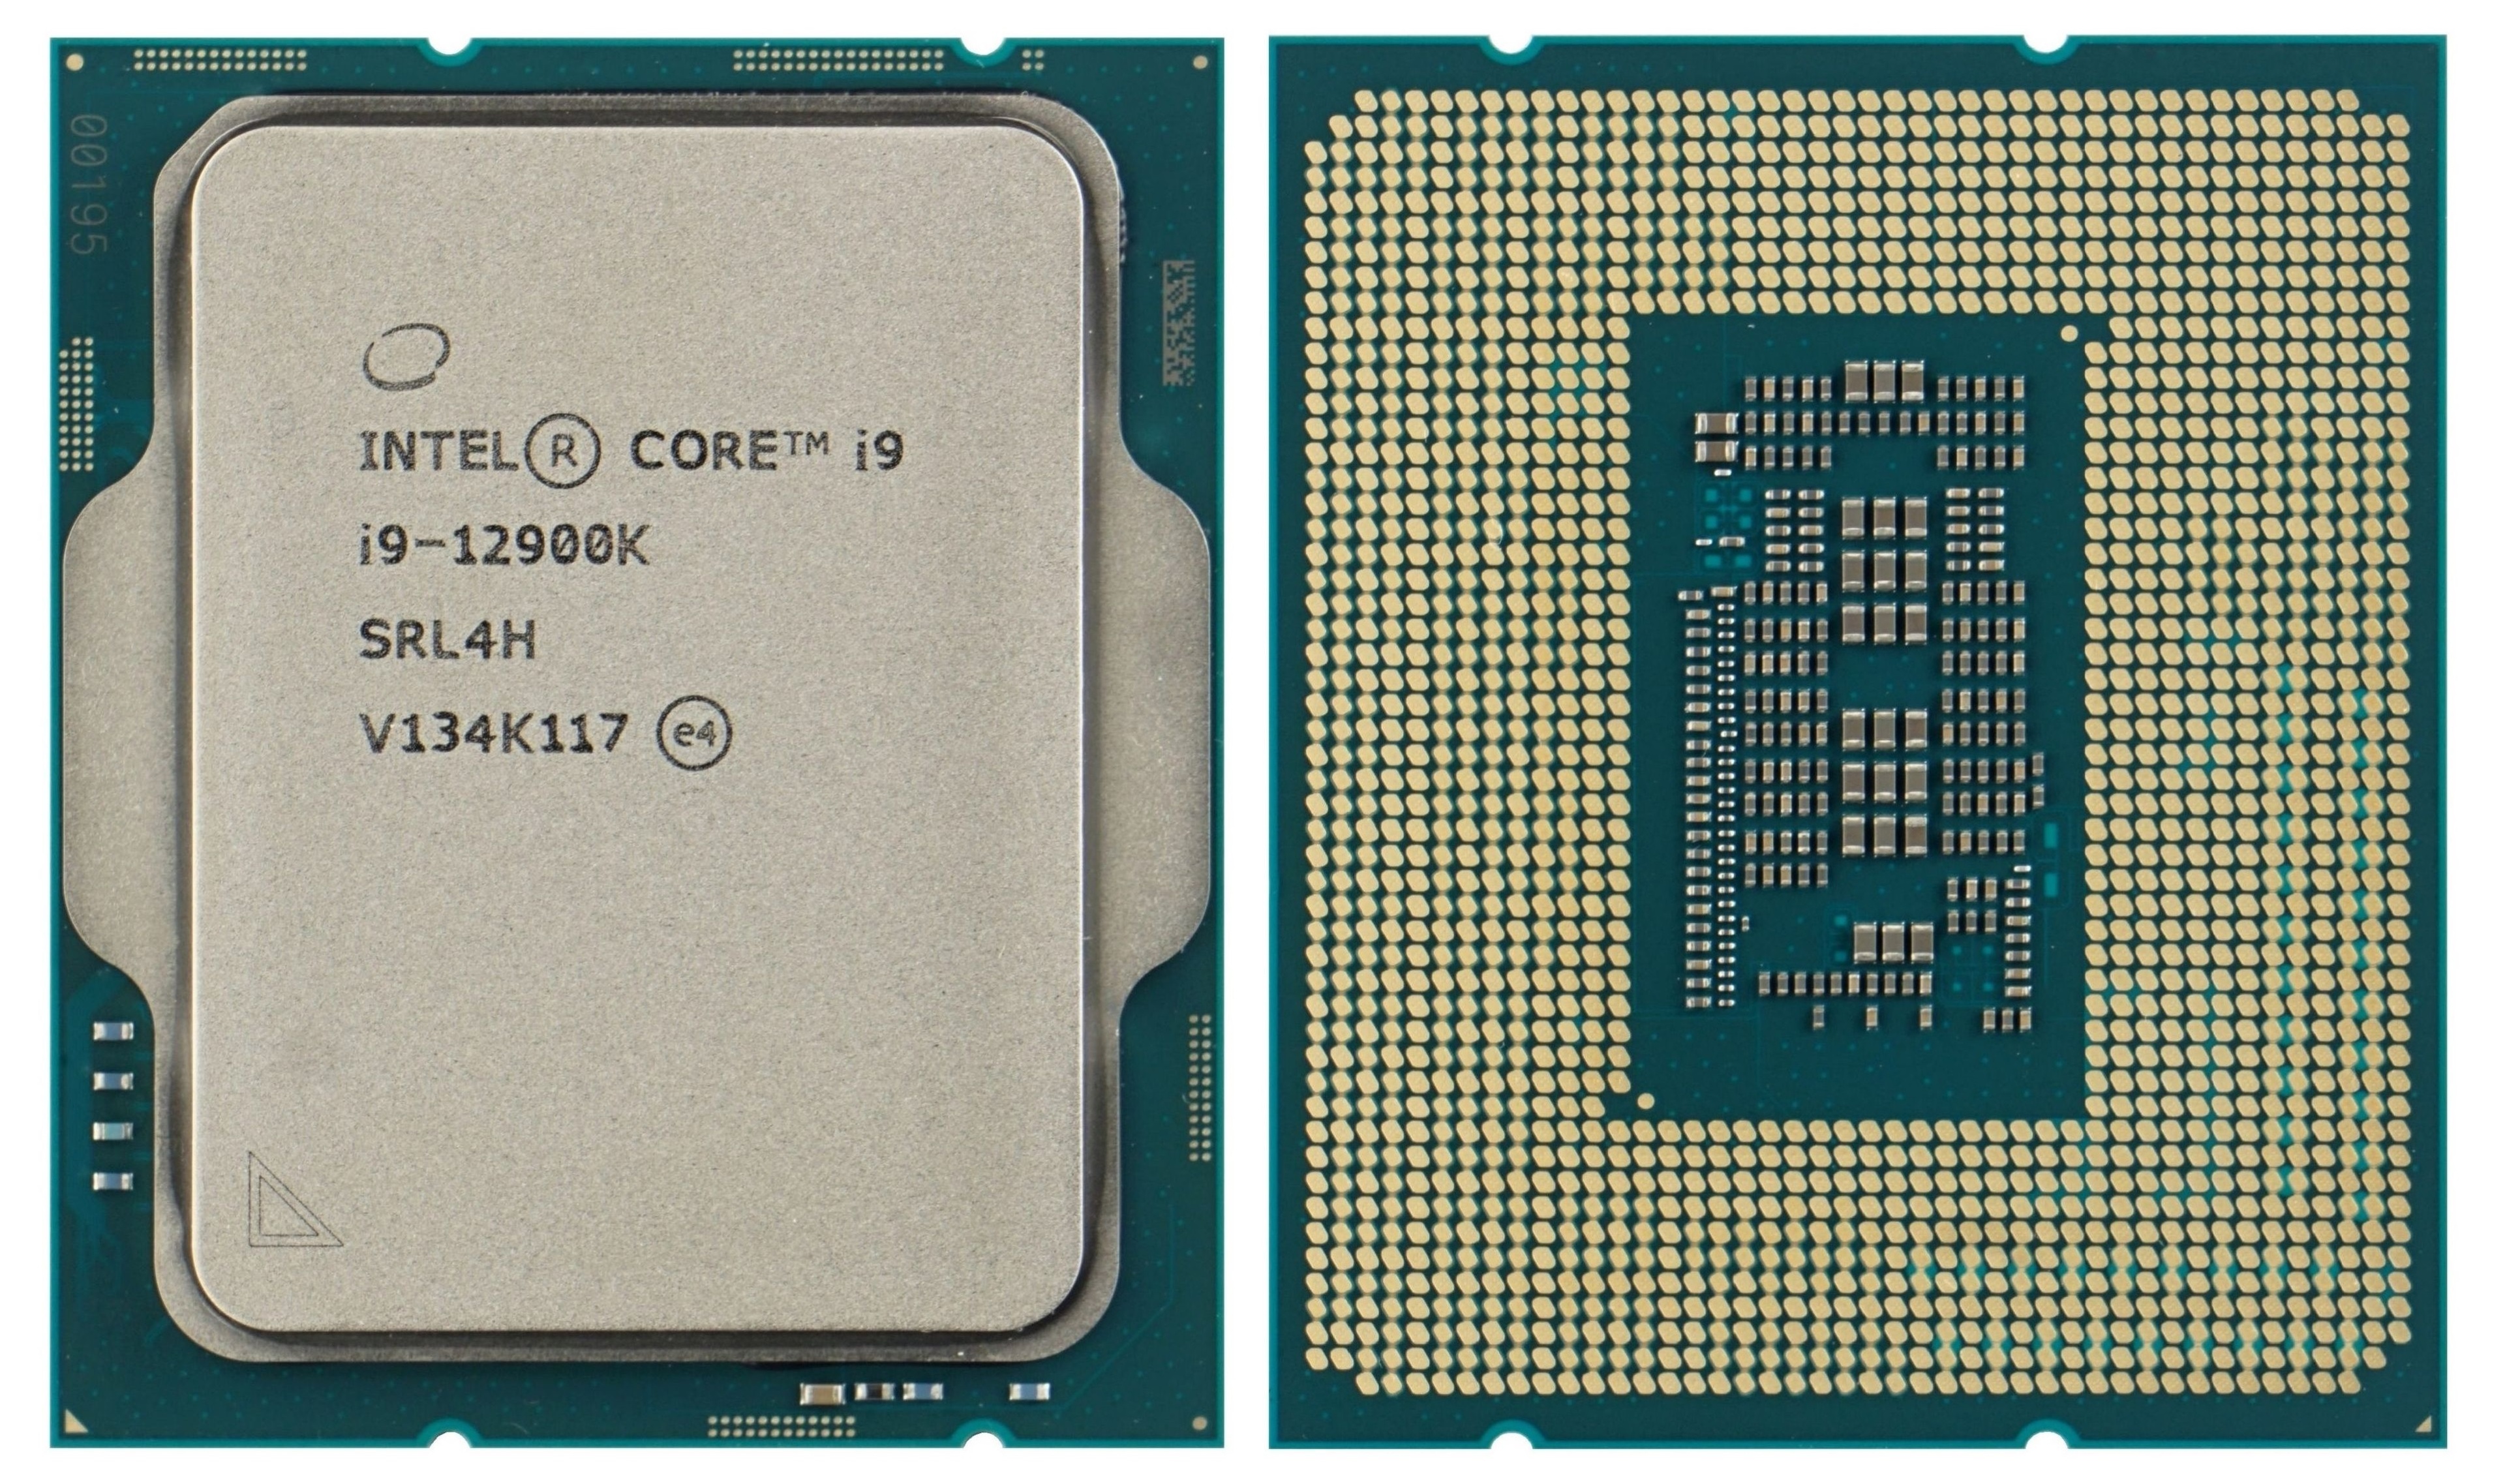 Intel Core i9-12900K megatest: AMD in 2nd place again 